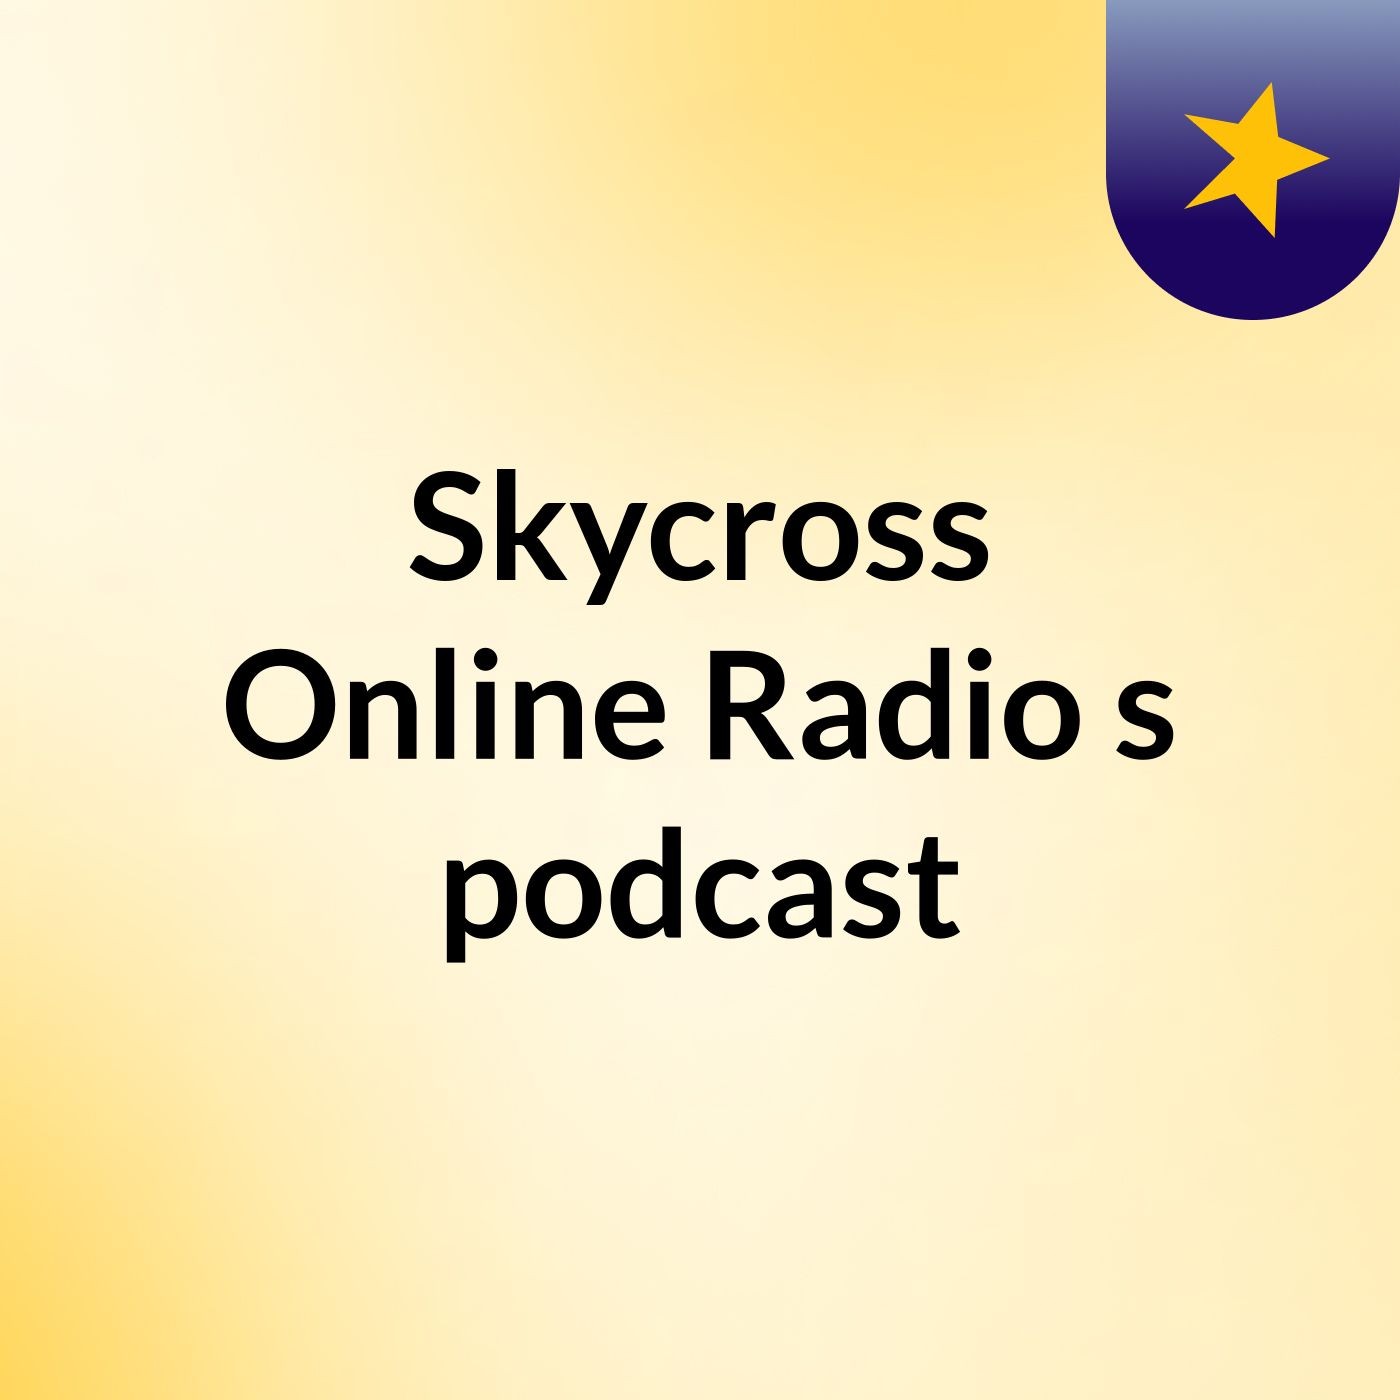 Episode 8 - Skycross Online Radio's podcast